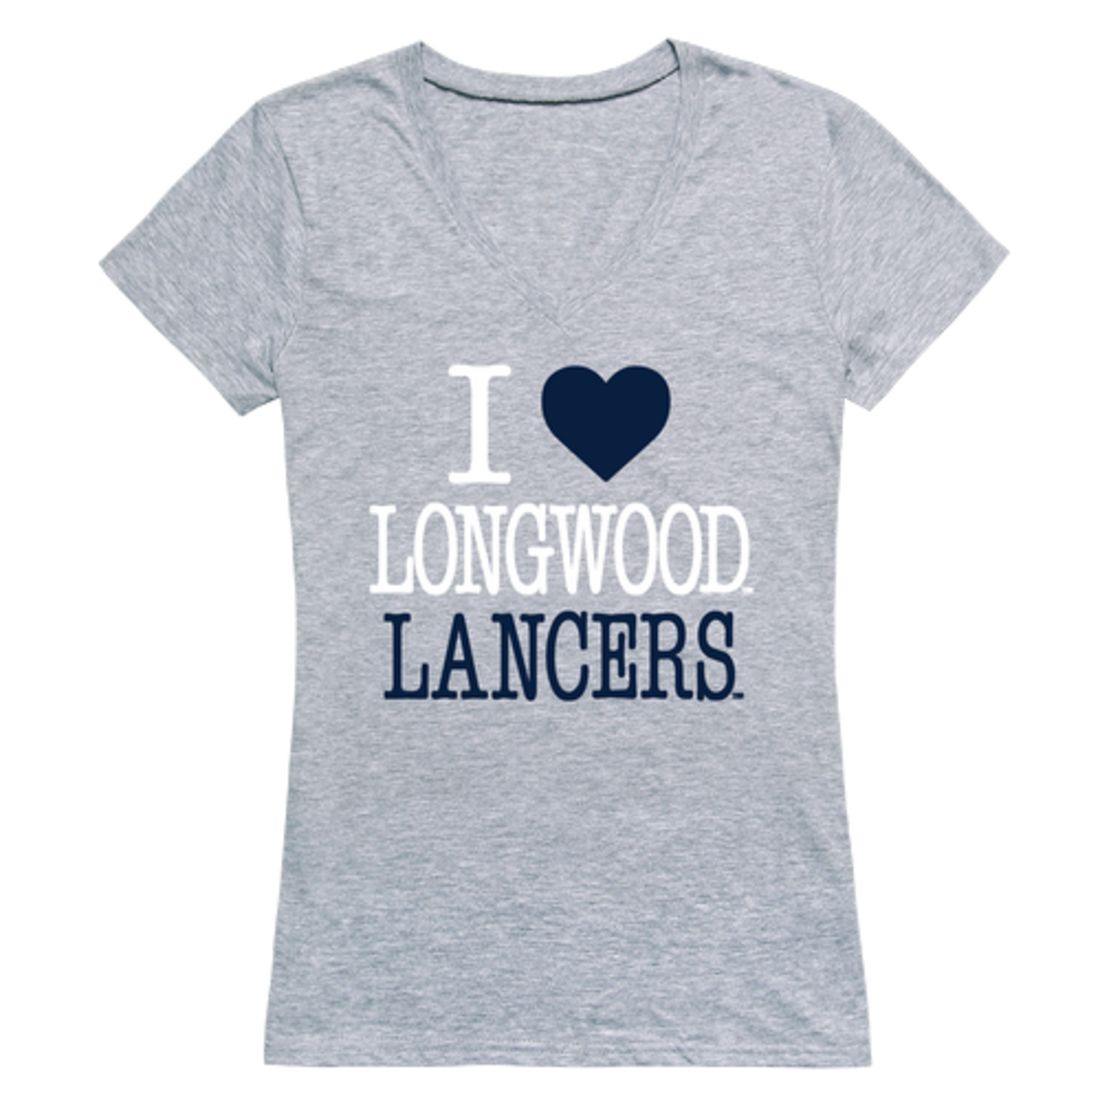 I Love Longwood University Lancers Womens T-Shirt-Campus-Wardrobe